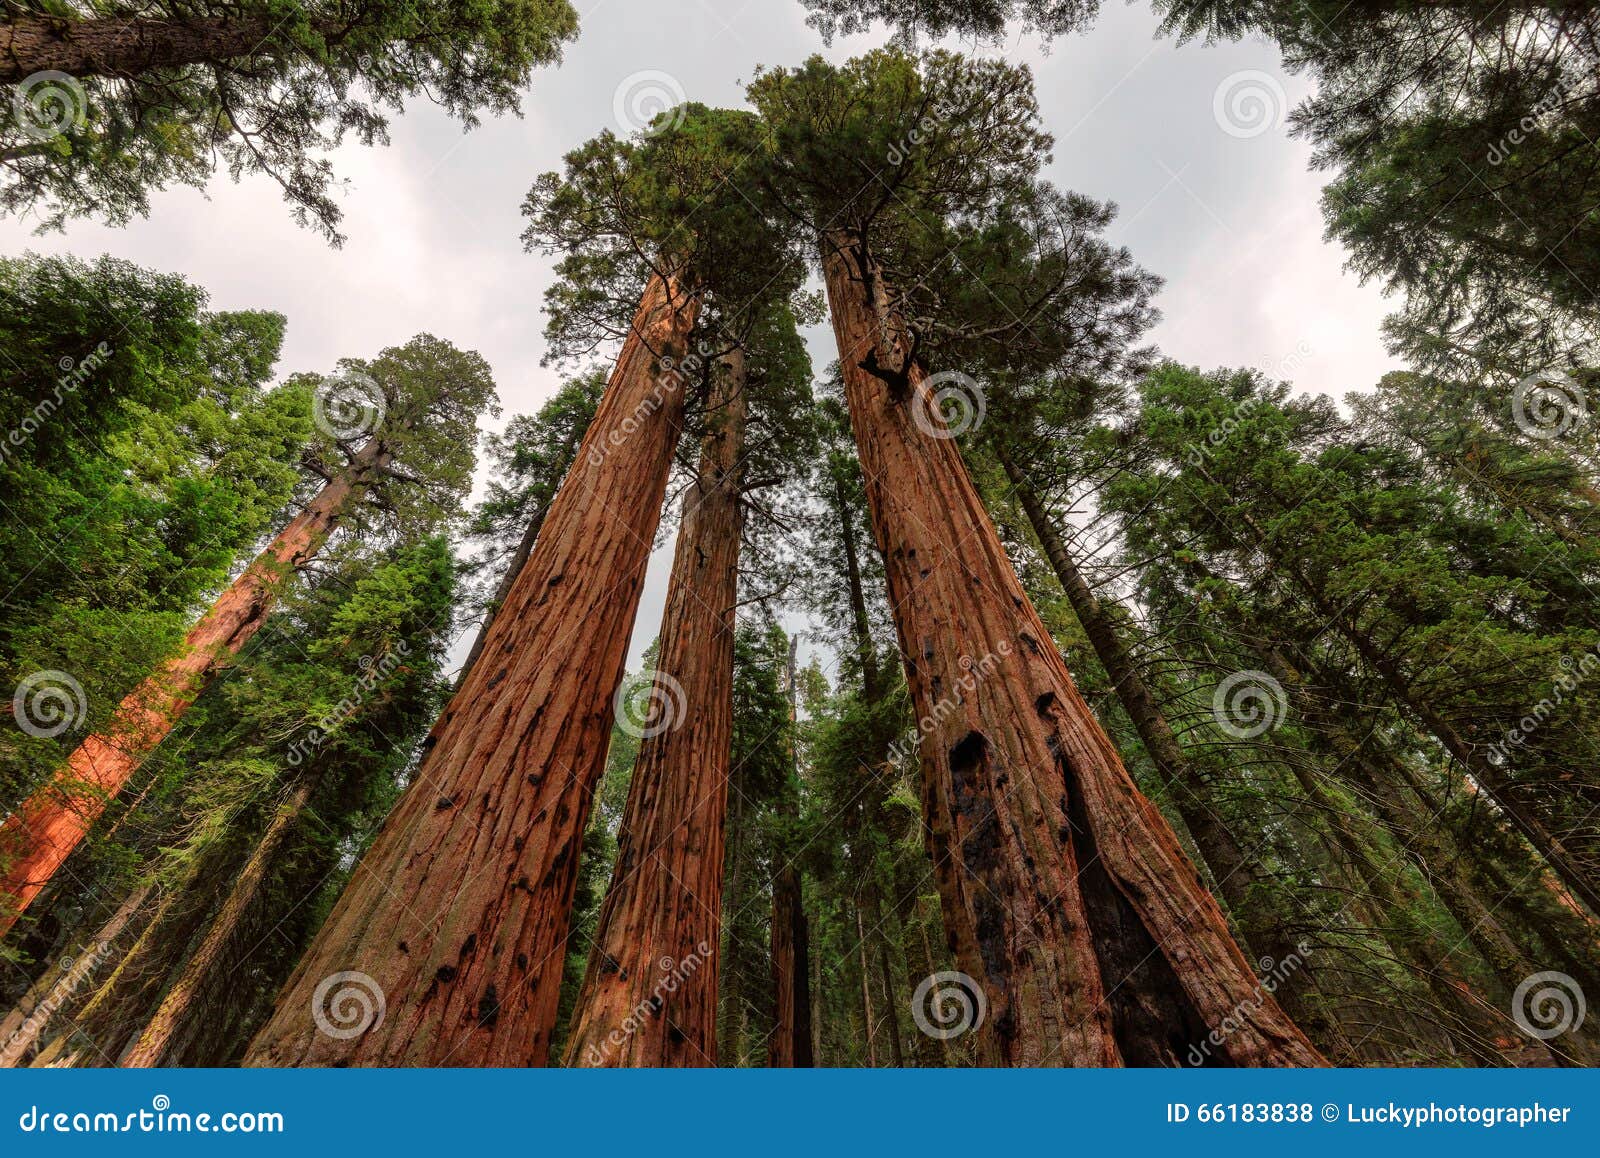 giant sequoias tree closeup in sequoia national park